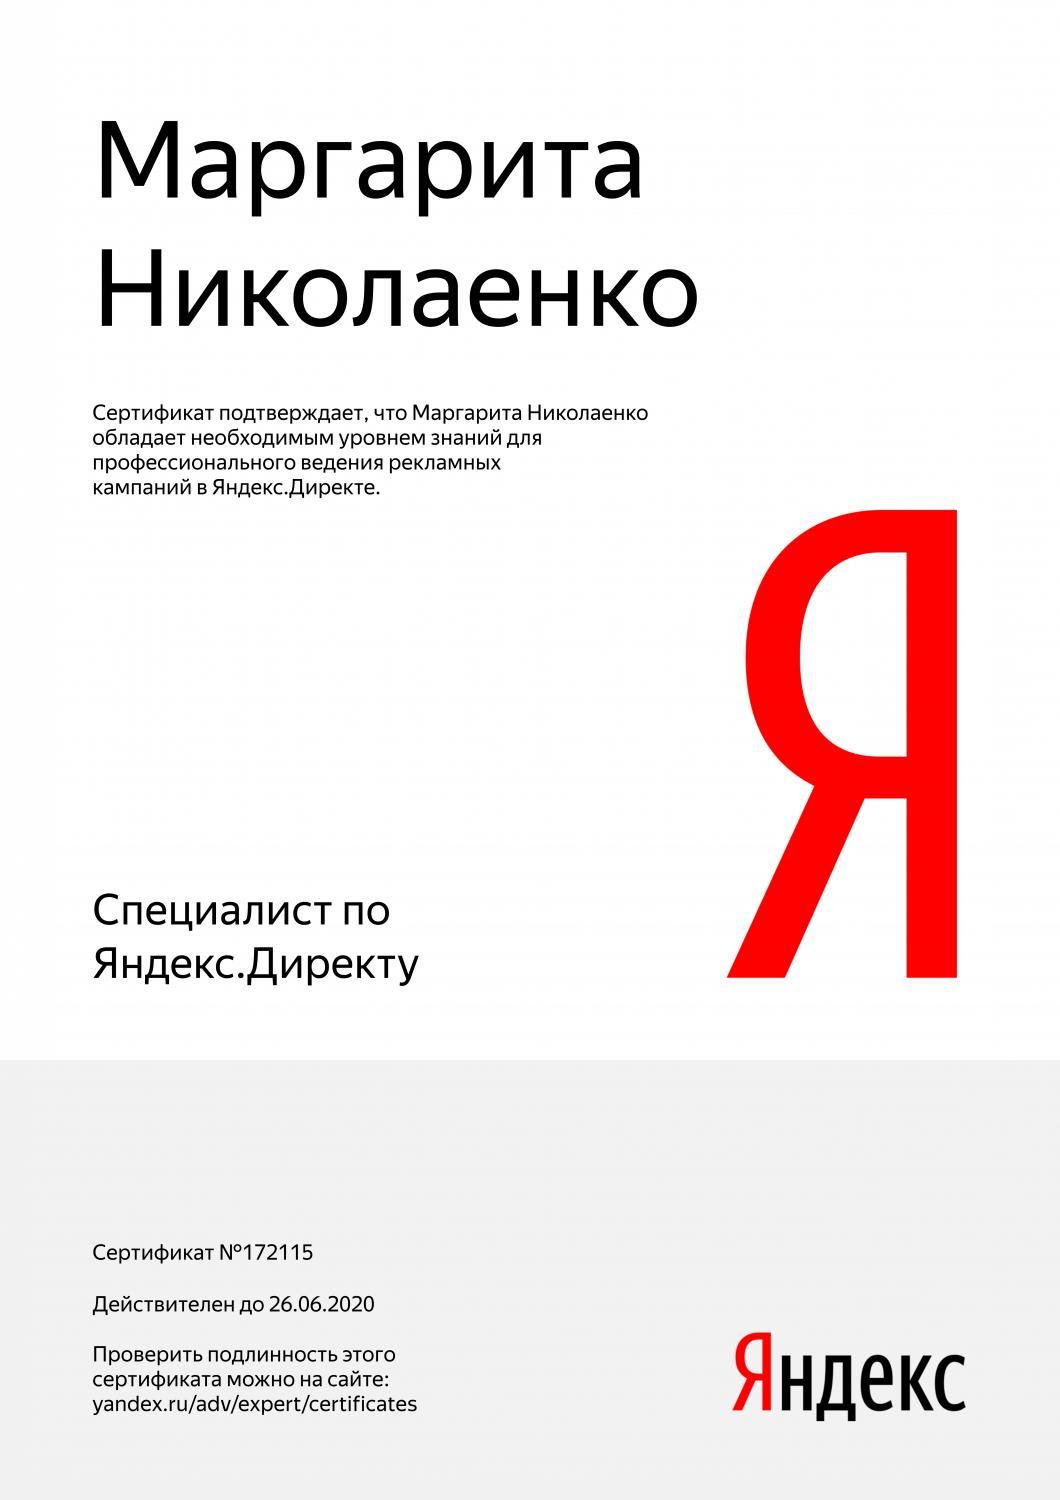 Сертификат специалиста Яндекс. Директ - Николаенко М. в Северодвинска